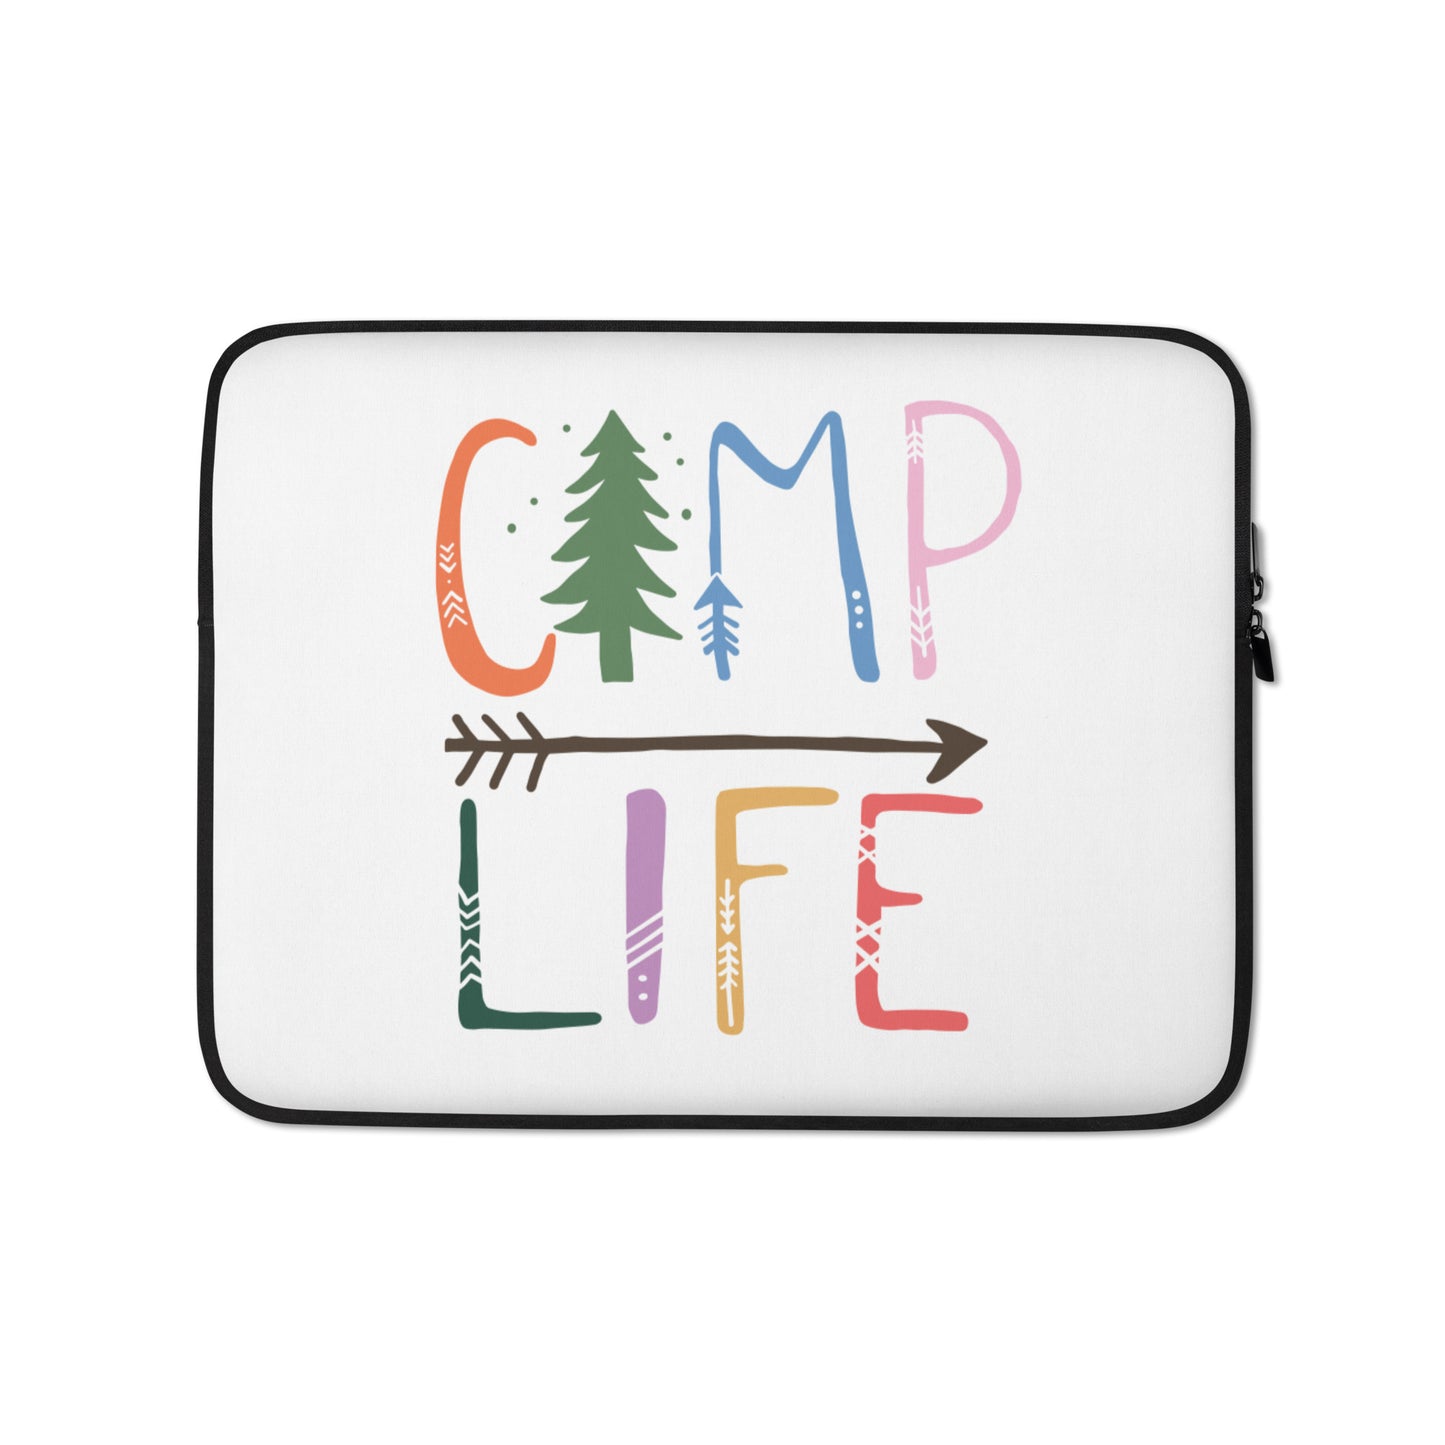 Camp Life Laptop Sleeve